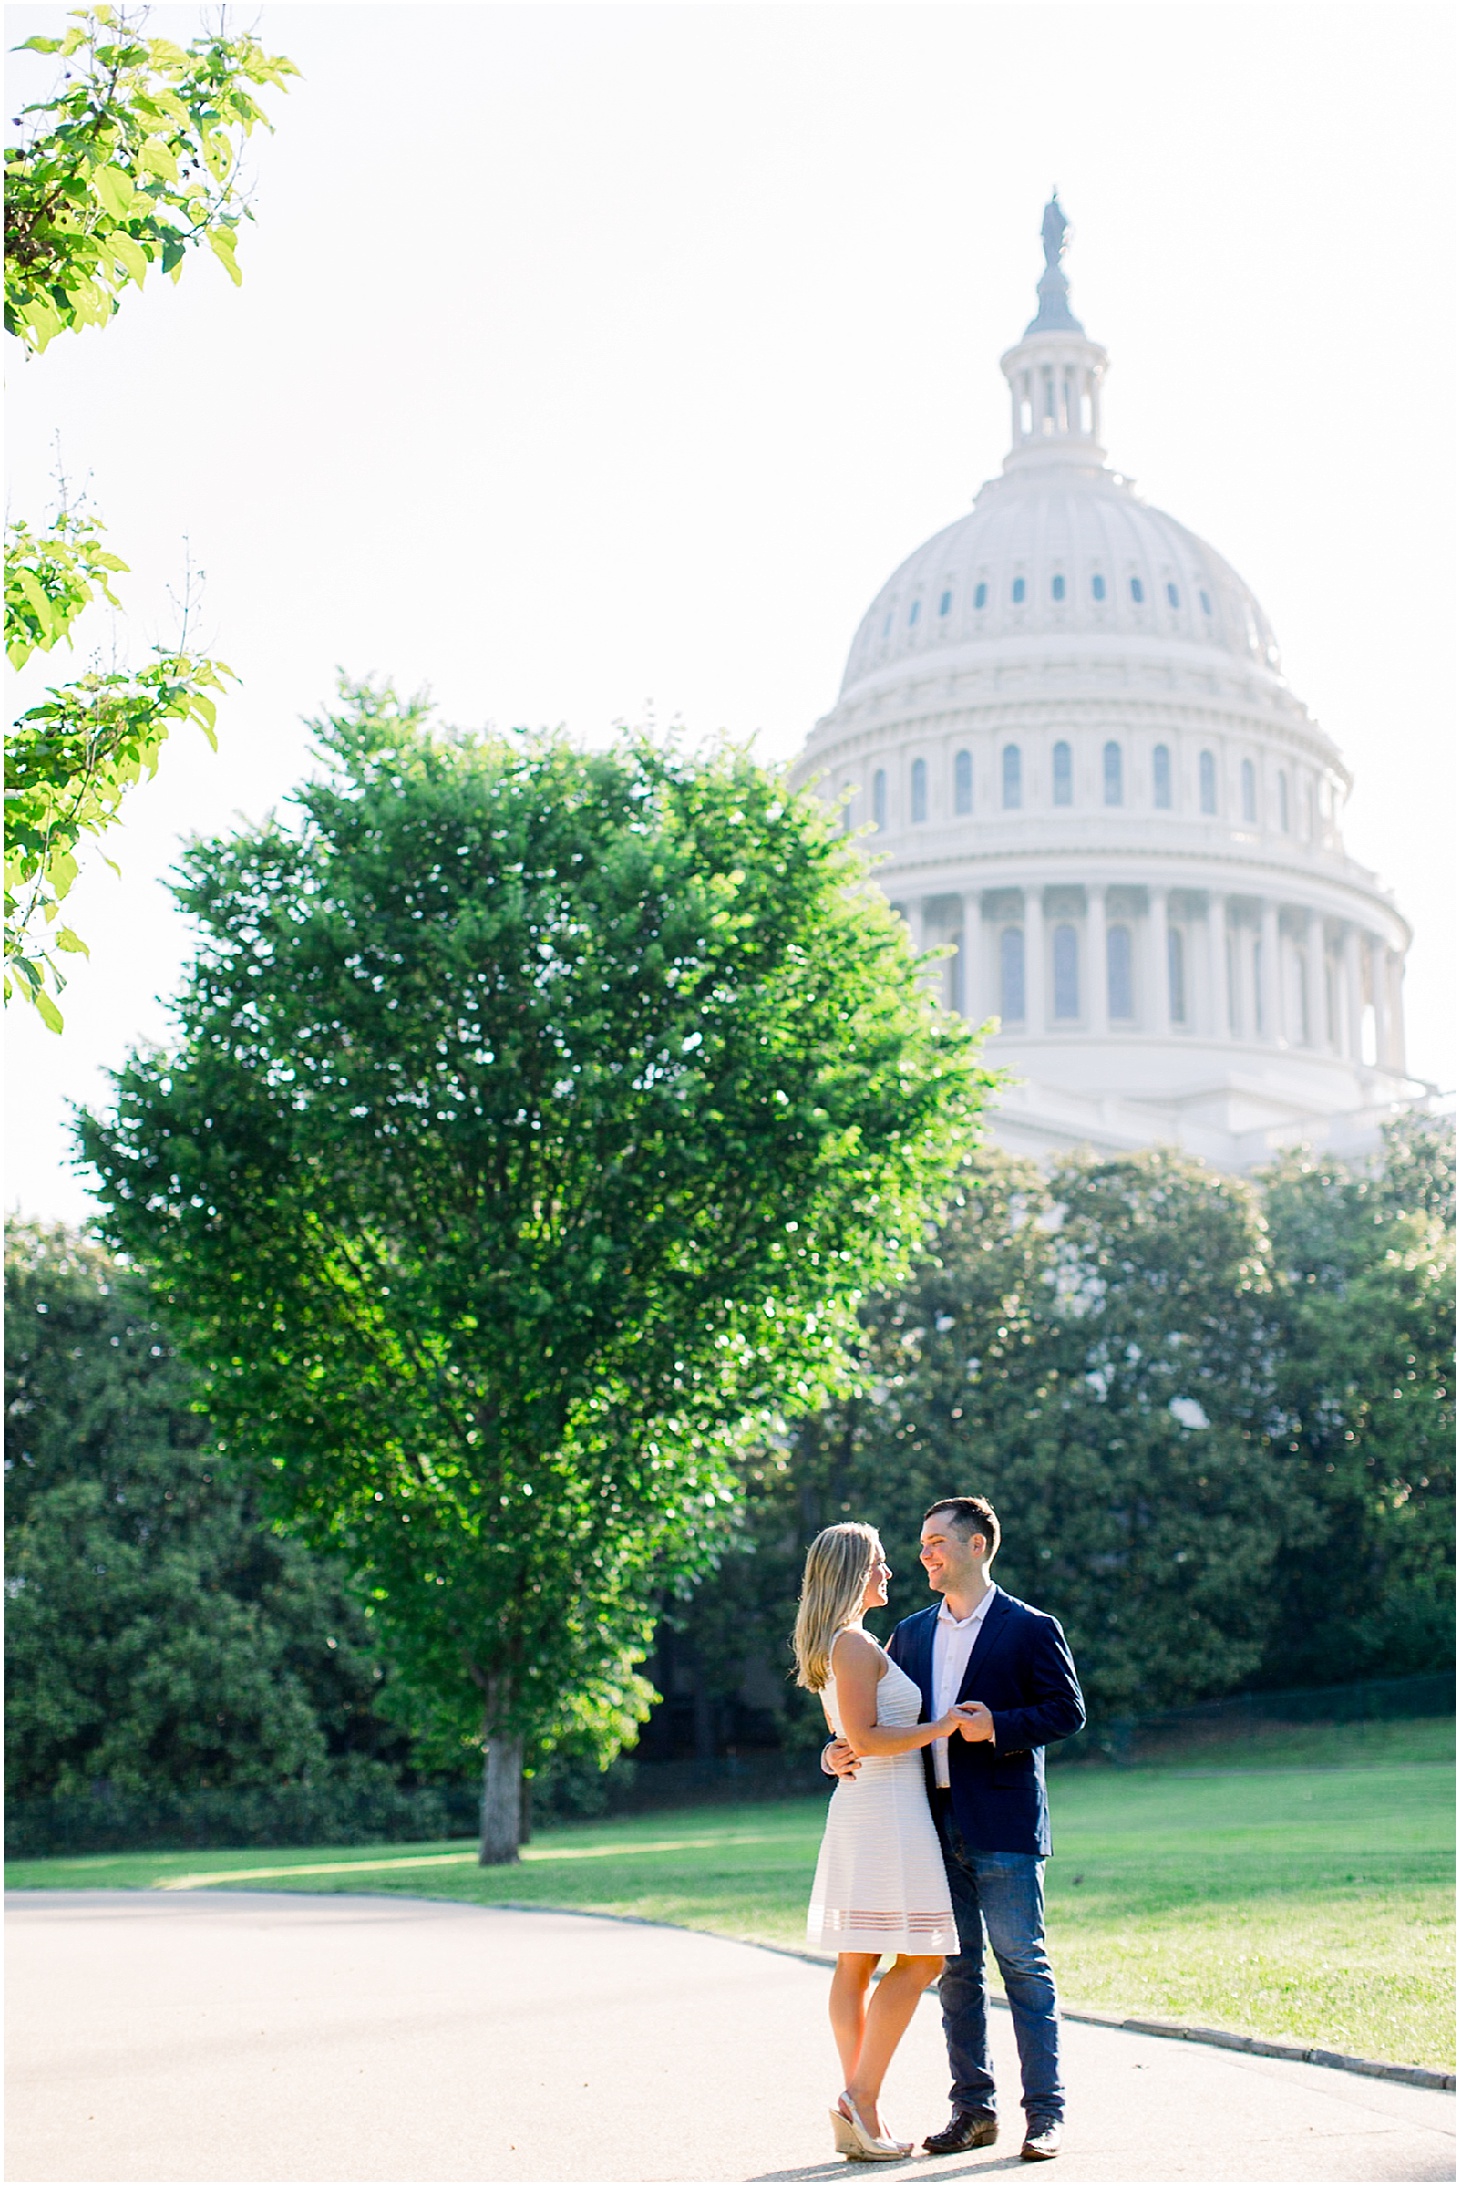 Spring Engagement Portraits at US Capitol | Sunrise Engagement Session on Capitol Hill | Sarah Bradshaw Photography | DC Wedding Photographer